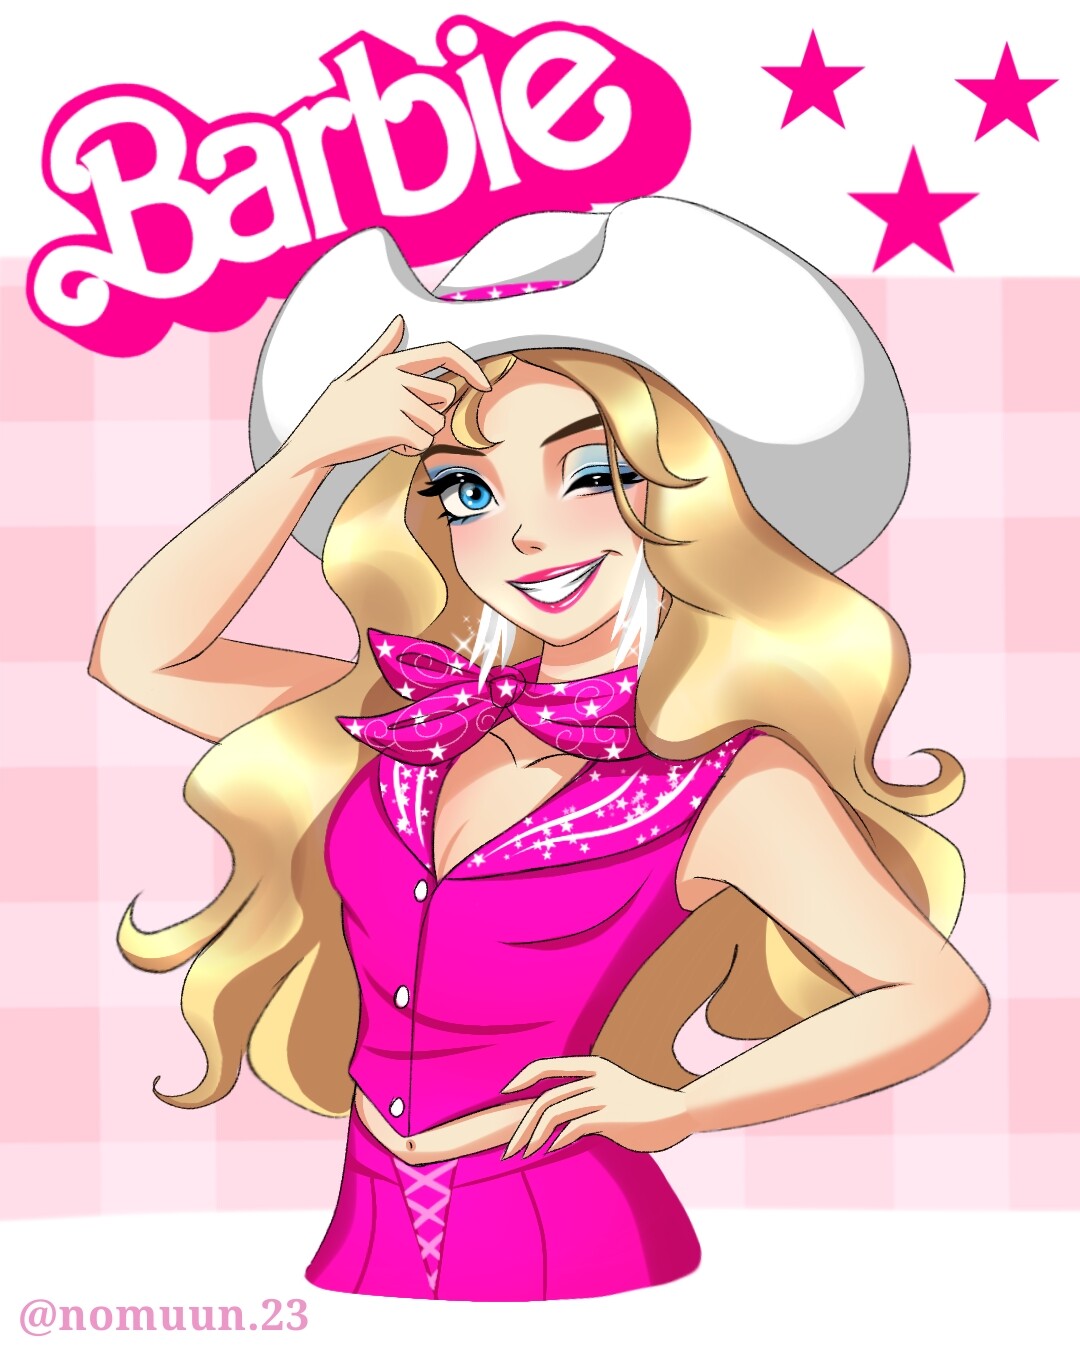 ArtStation - Barbie